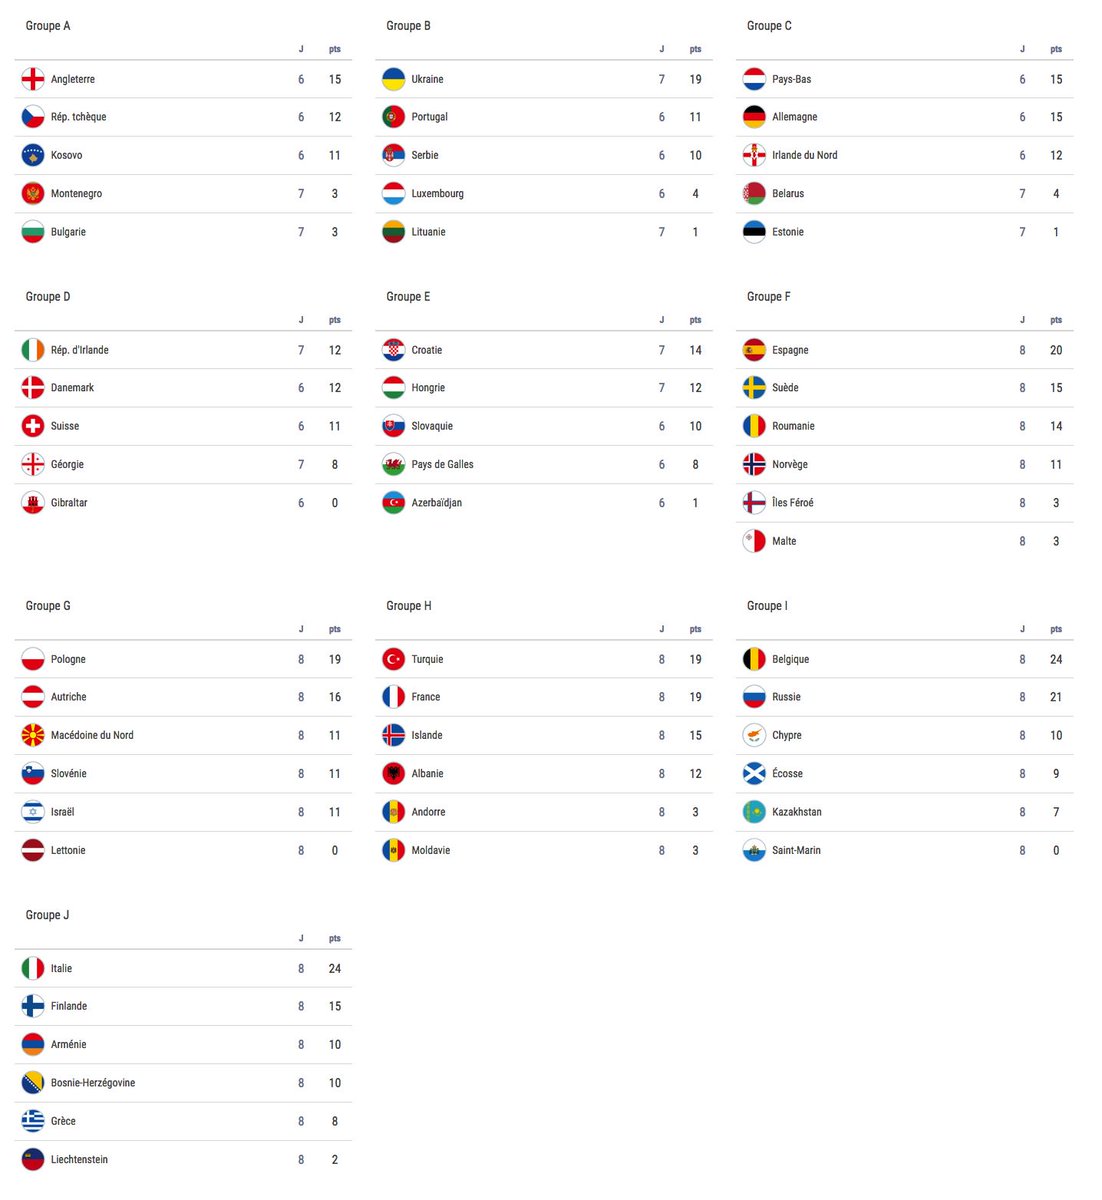 #Euro2020 #Qualifications #EuropeanQualifiers

Rankings #Day8 / Classements #J8

#Qualifiés / #Qualified
✅ 🇧🇪 🇮🇹 🇷🇺 🇵🇱 🇺🇦 🇪🇸 ✈️@EURO2020

#Eliminés / #Eliminated
👋 🇲🇪🇧🇬 🇱🇺 🇱🇹 🇪🇪 🇬🇮 🇦🇿 🇲🇹 🇫🇴 🇱🇻 🇦🇩 🇲🇩 🇦🇱 🇰🇿 🇸🇲 🇨🇾 🇱🇮 🇬🇷 👋

#NationsLeaguePlayoffs / #BarragesLDN
C: 🏴󠁧󠁢󠁳󠁣󠁴󠁿
D: 🇬🇪 🇧🇾